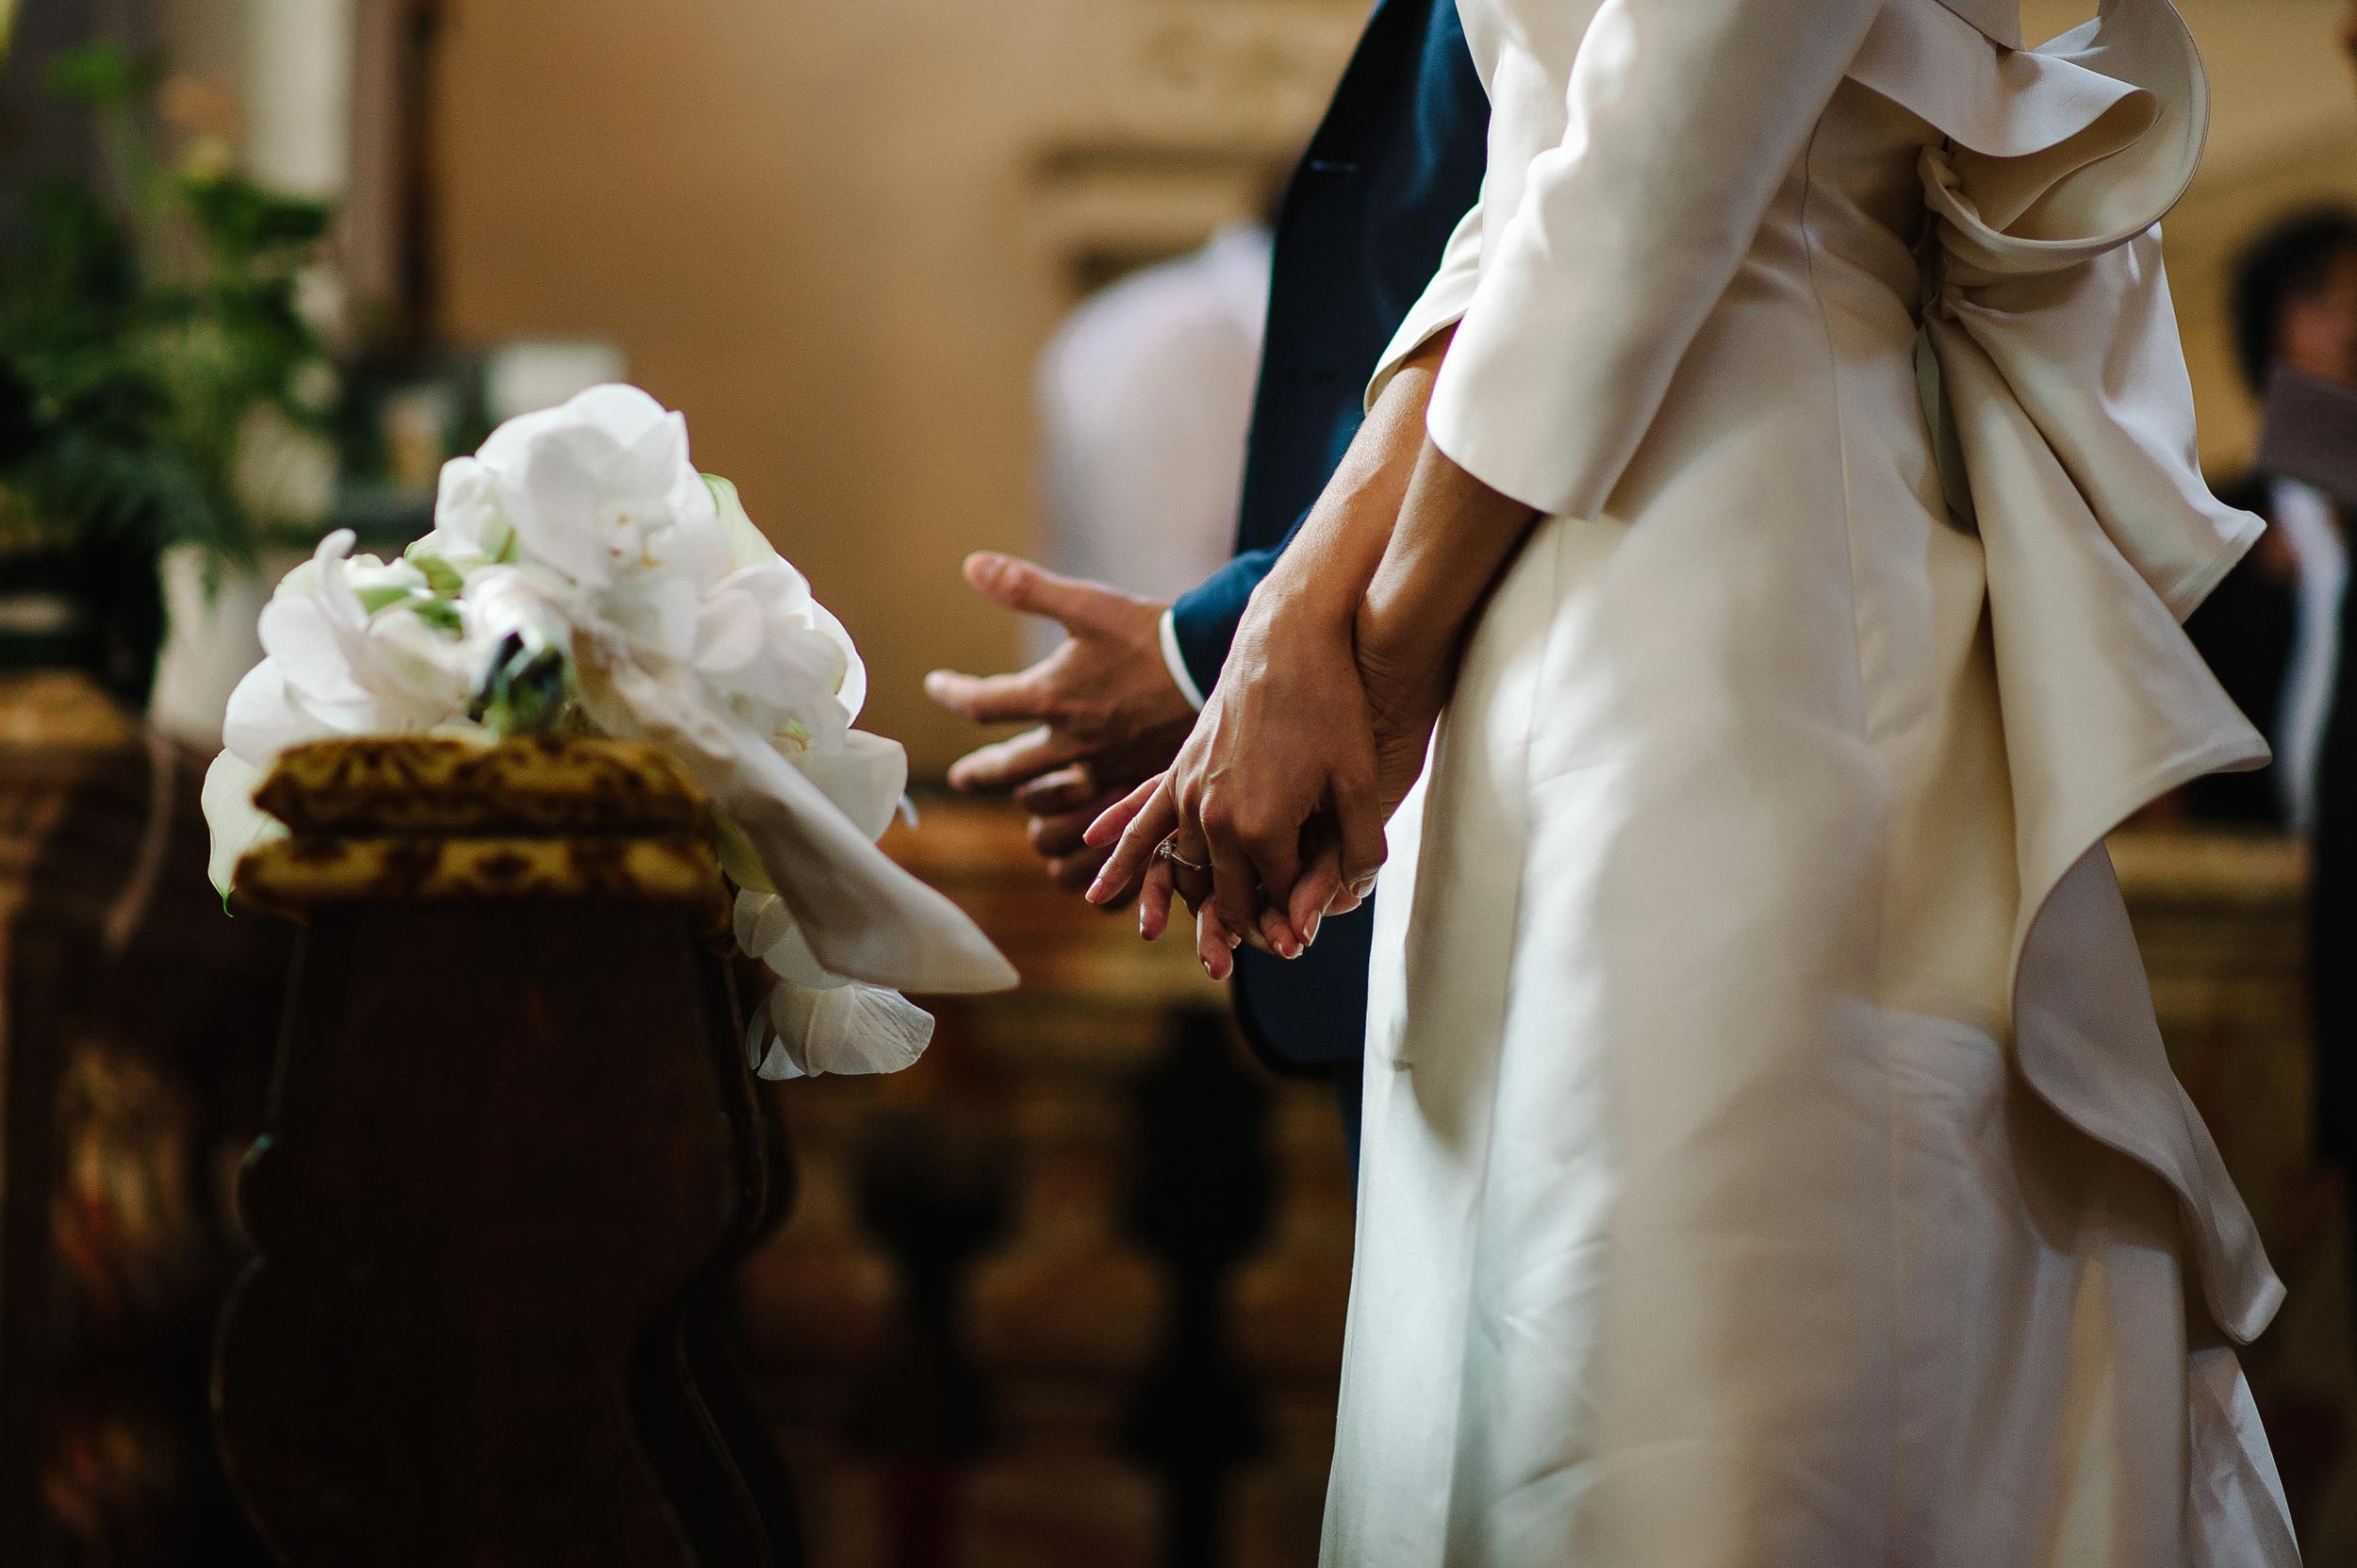 bride-and-groom-hands-touching-their-rings-after-rings-exchange-lugano-switzerlang.jpg